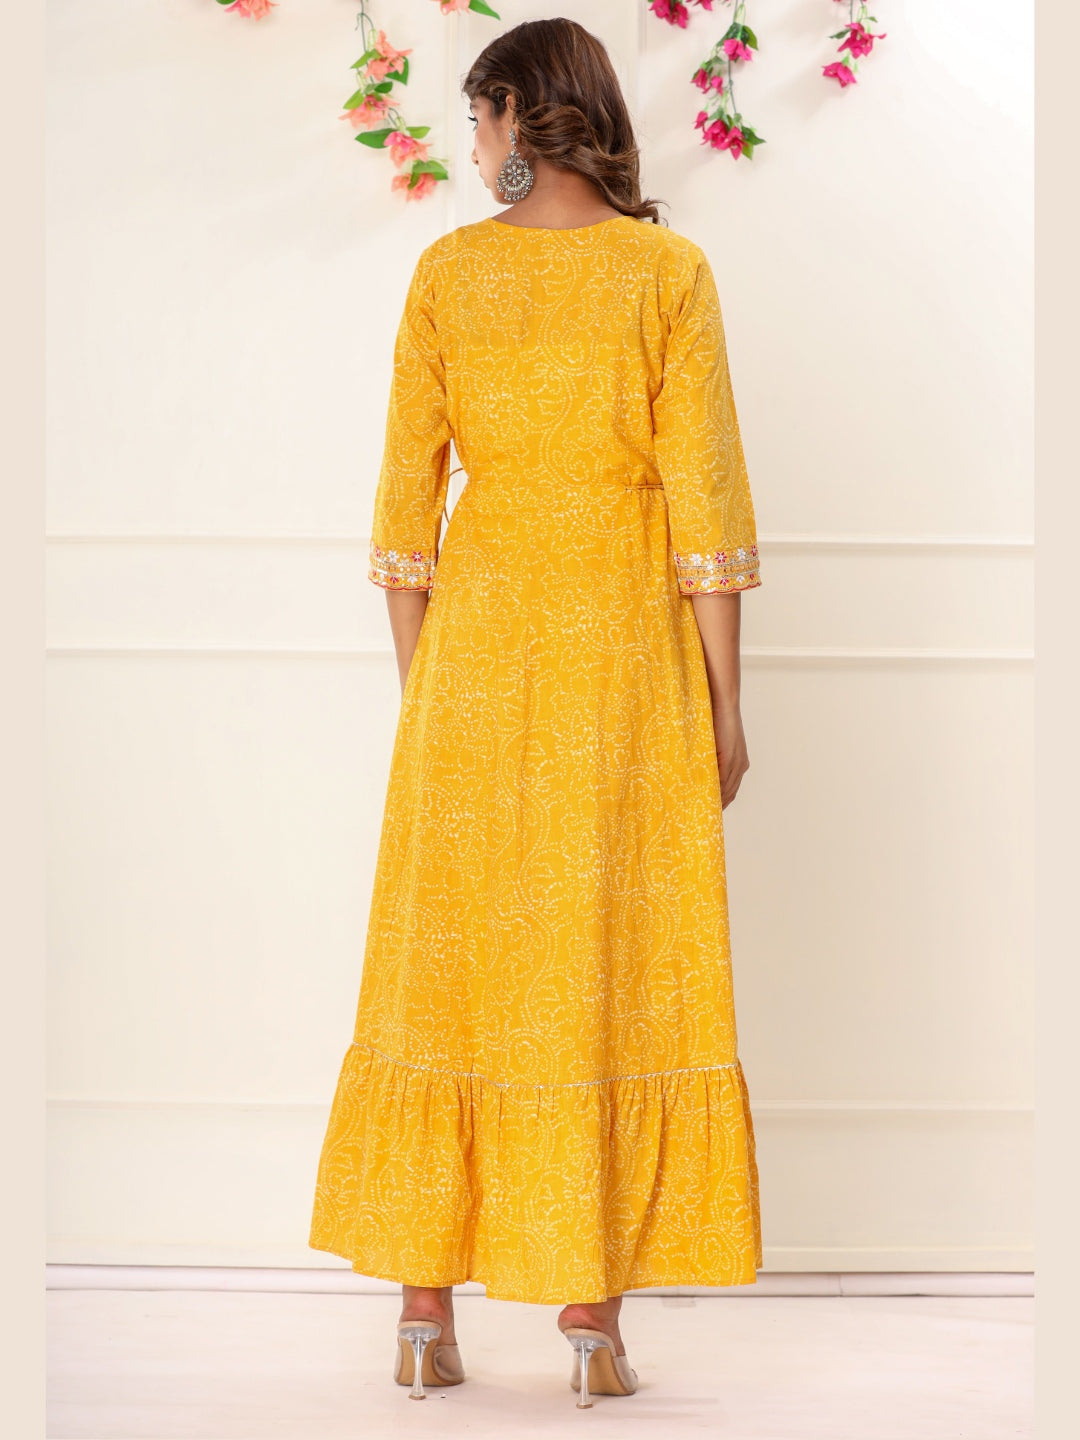 Bandhani Print Colorful Embroidered Anarkali Kurta Dress - Yellow